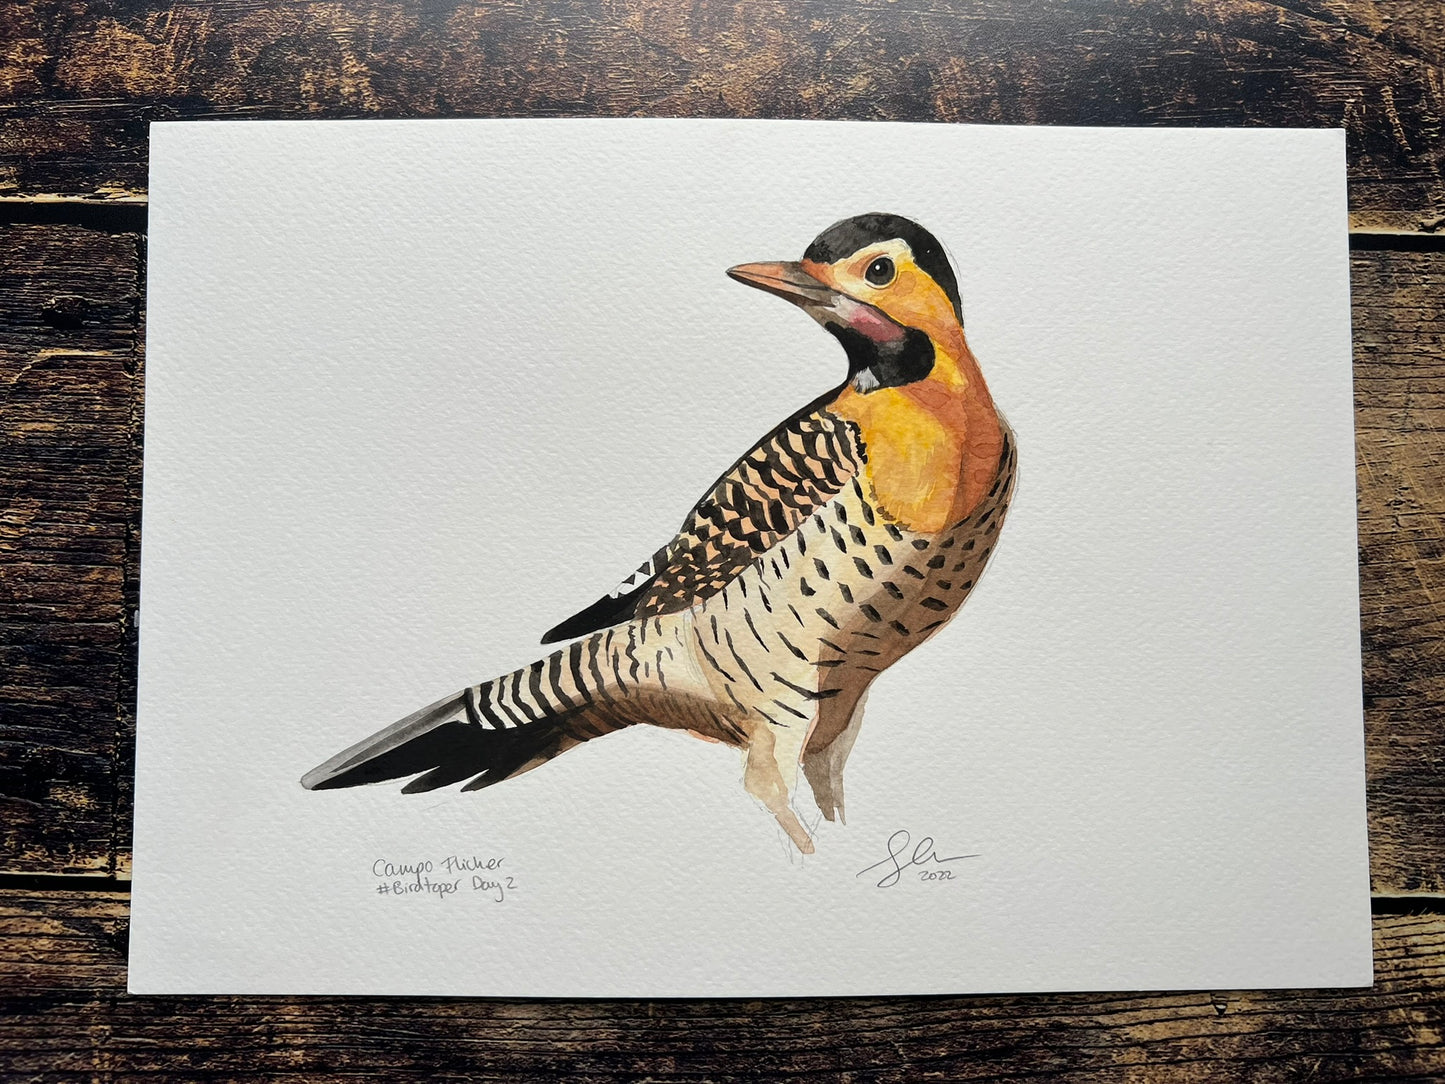 Campo flicker bird A4 painting